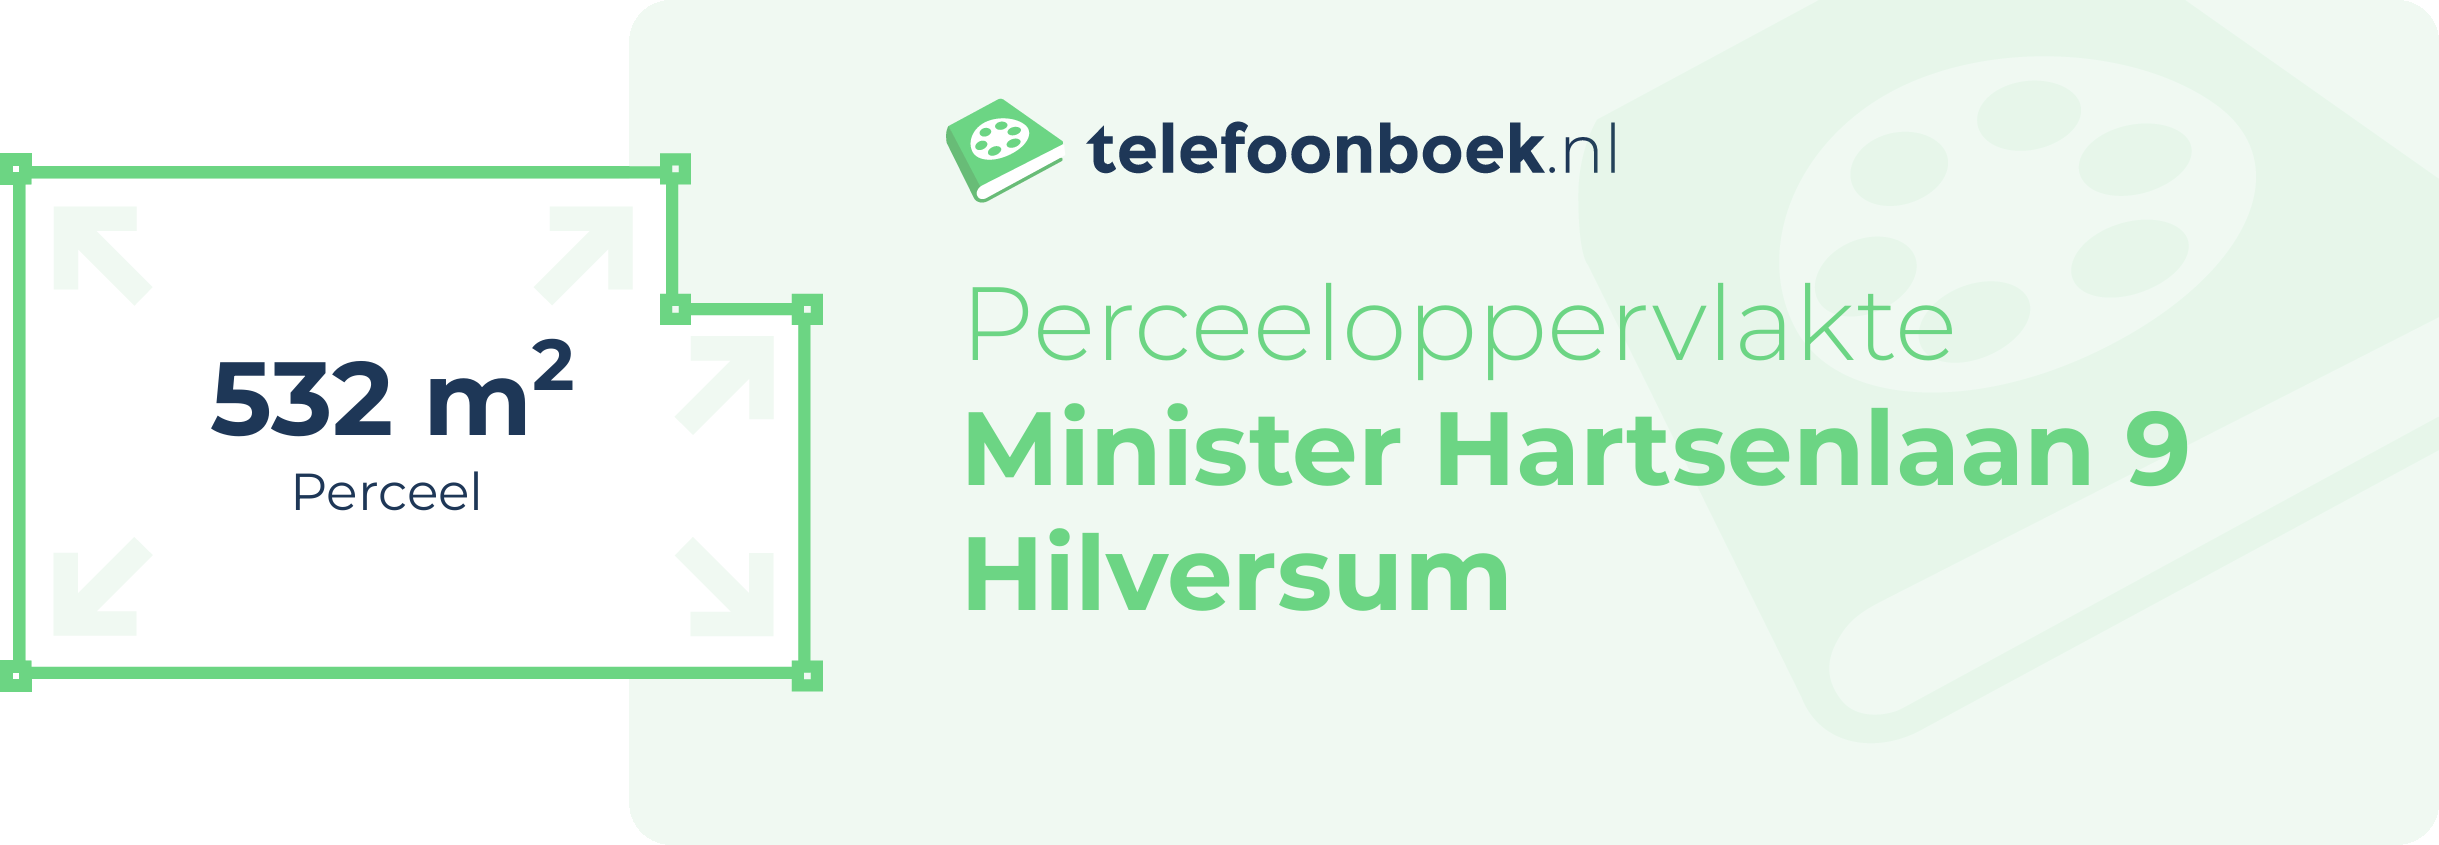 Perceeloppervlakte Minister Hartsenlaan 9 Hilversum